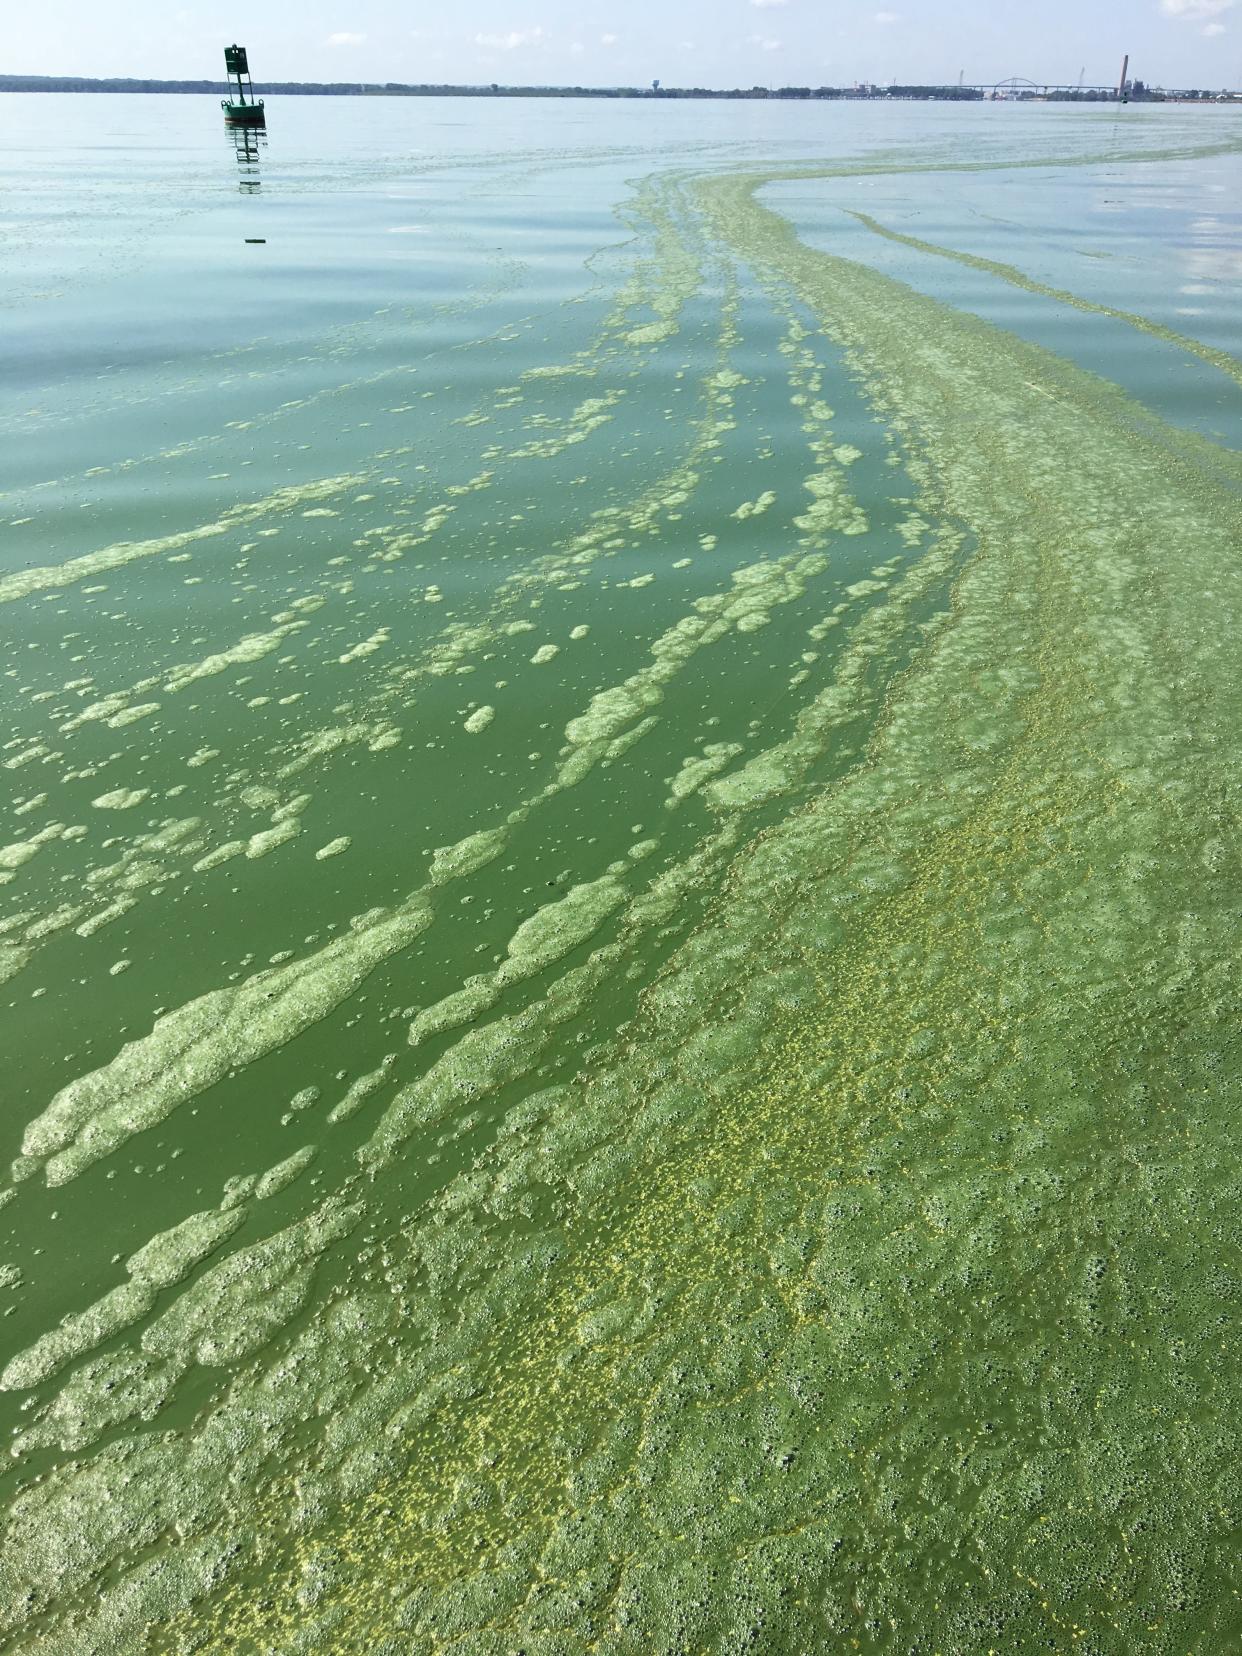 Cyanobacteria, or blue-green algae, on the surface of Green Bay just north of the Leo Frigo Memorial Bridge.